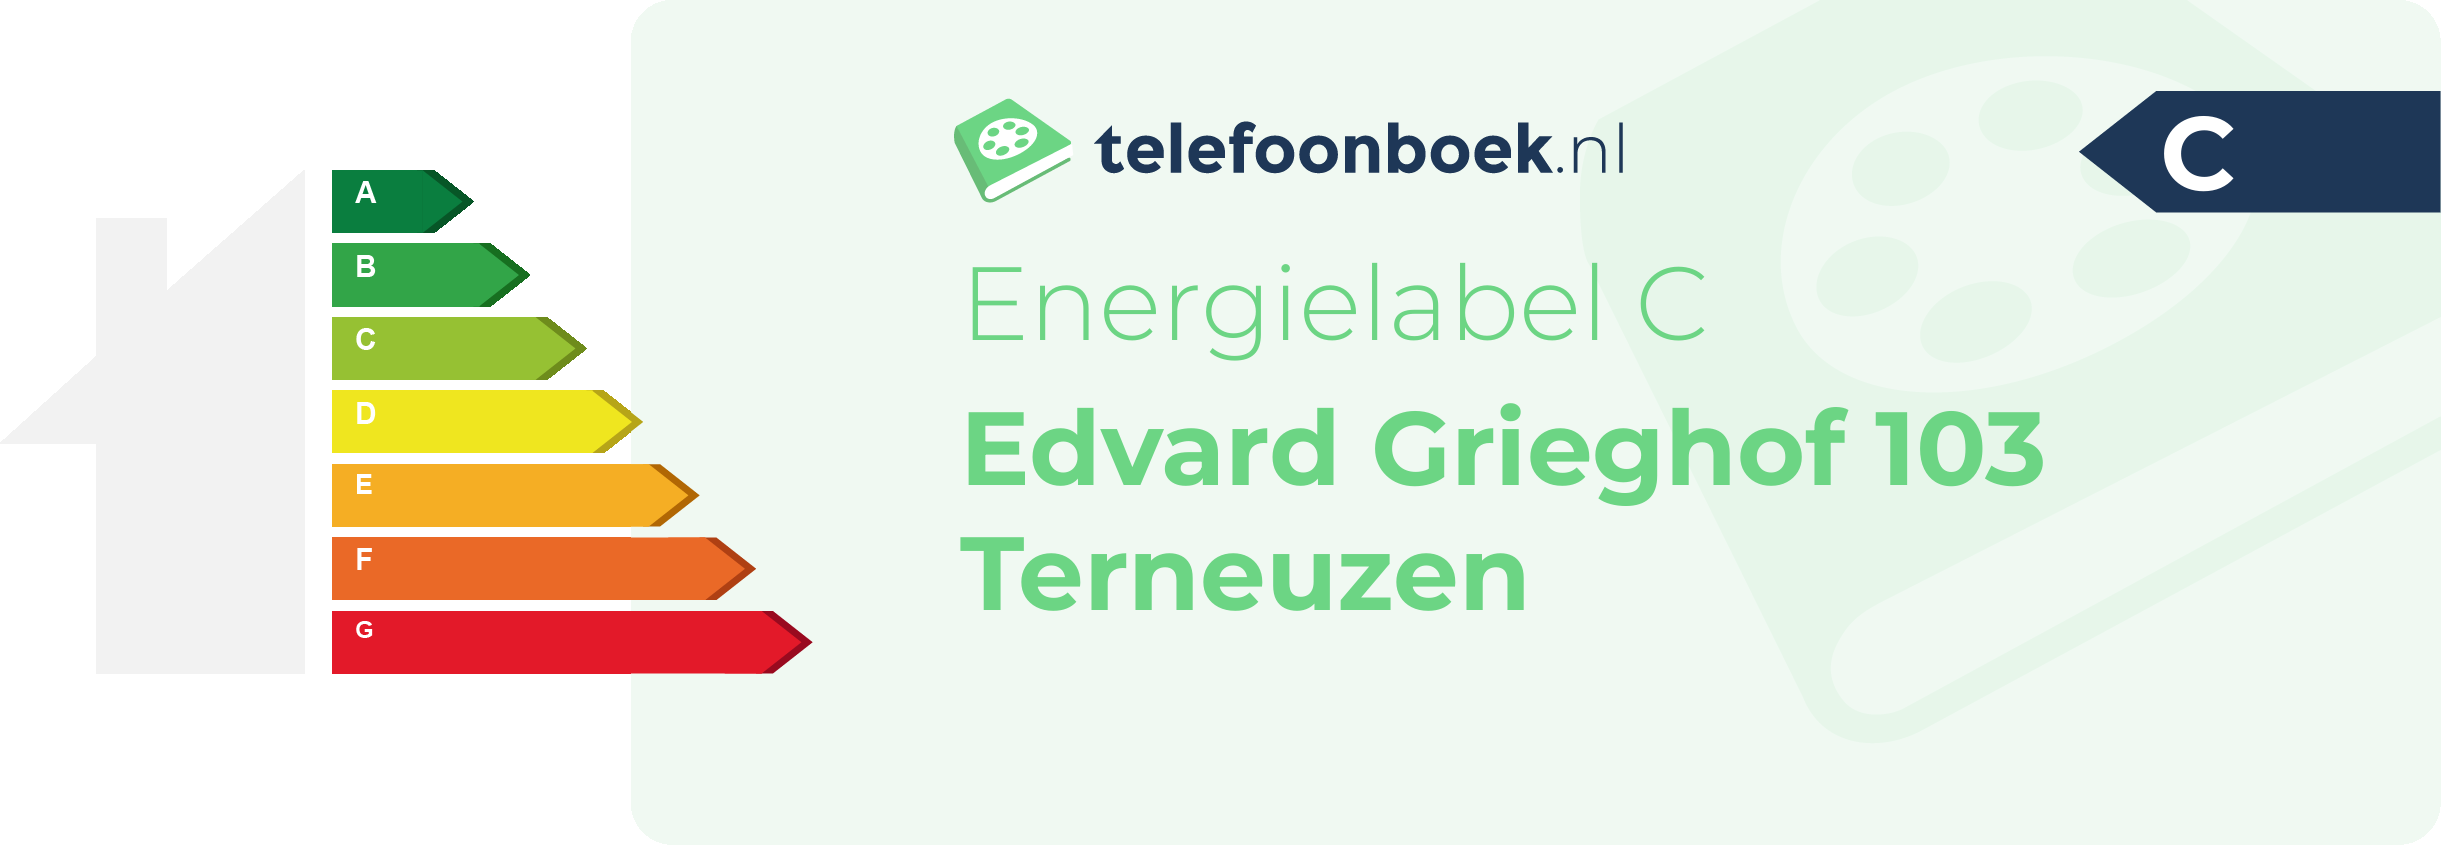 Energielabel Edvard Grieghof 103 Terneuzen